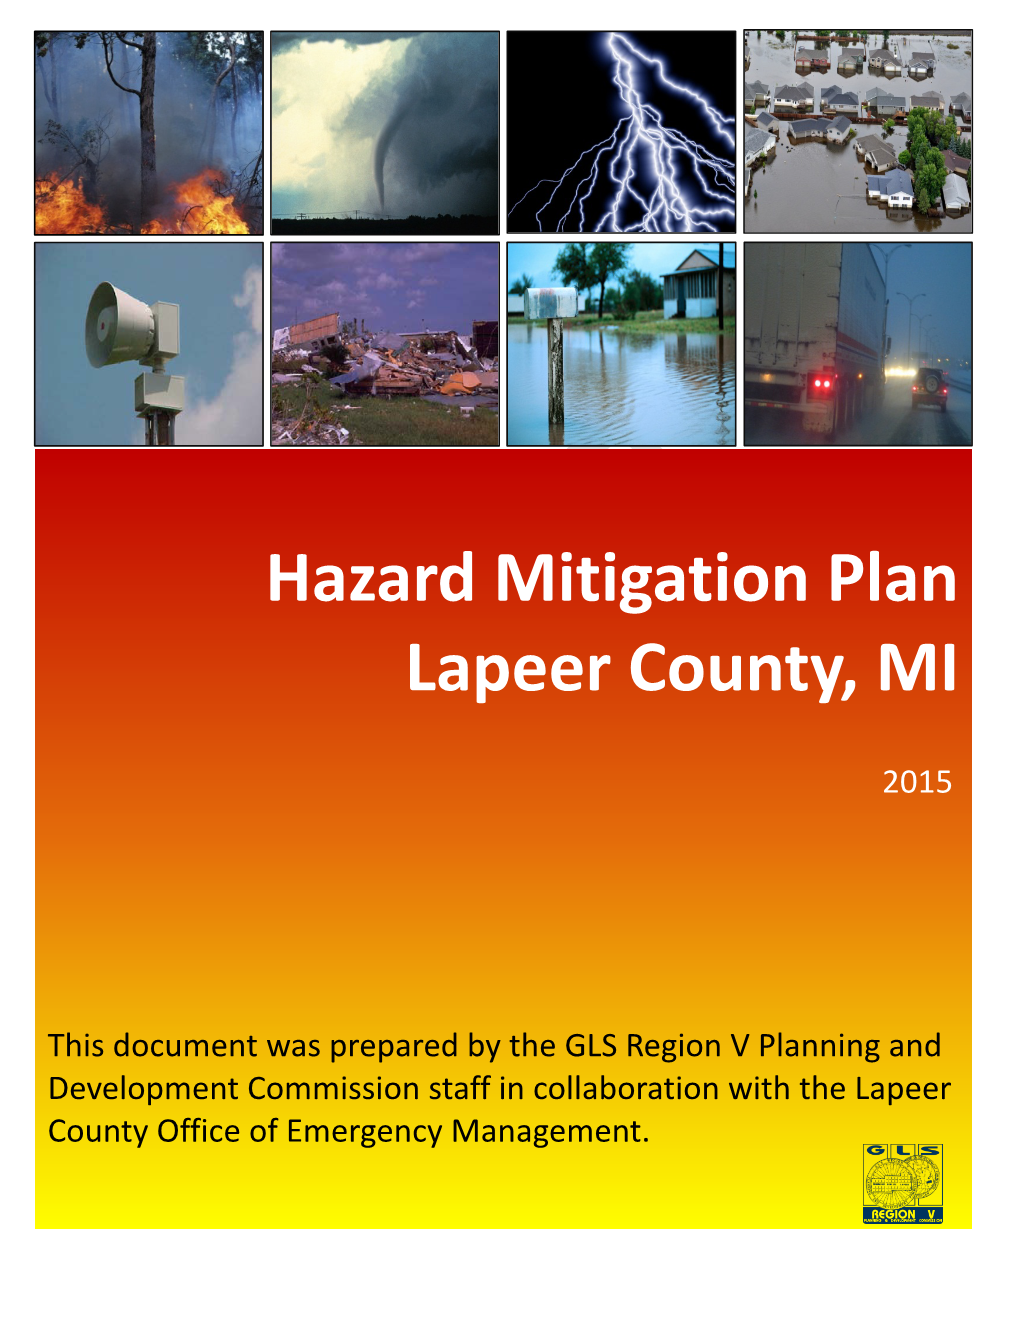 Hazard Mitigation Plan Lapeer County, MI